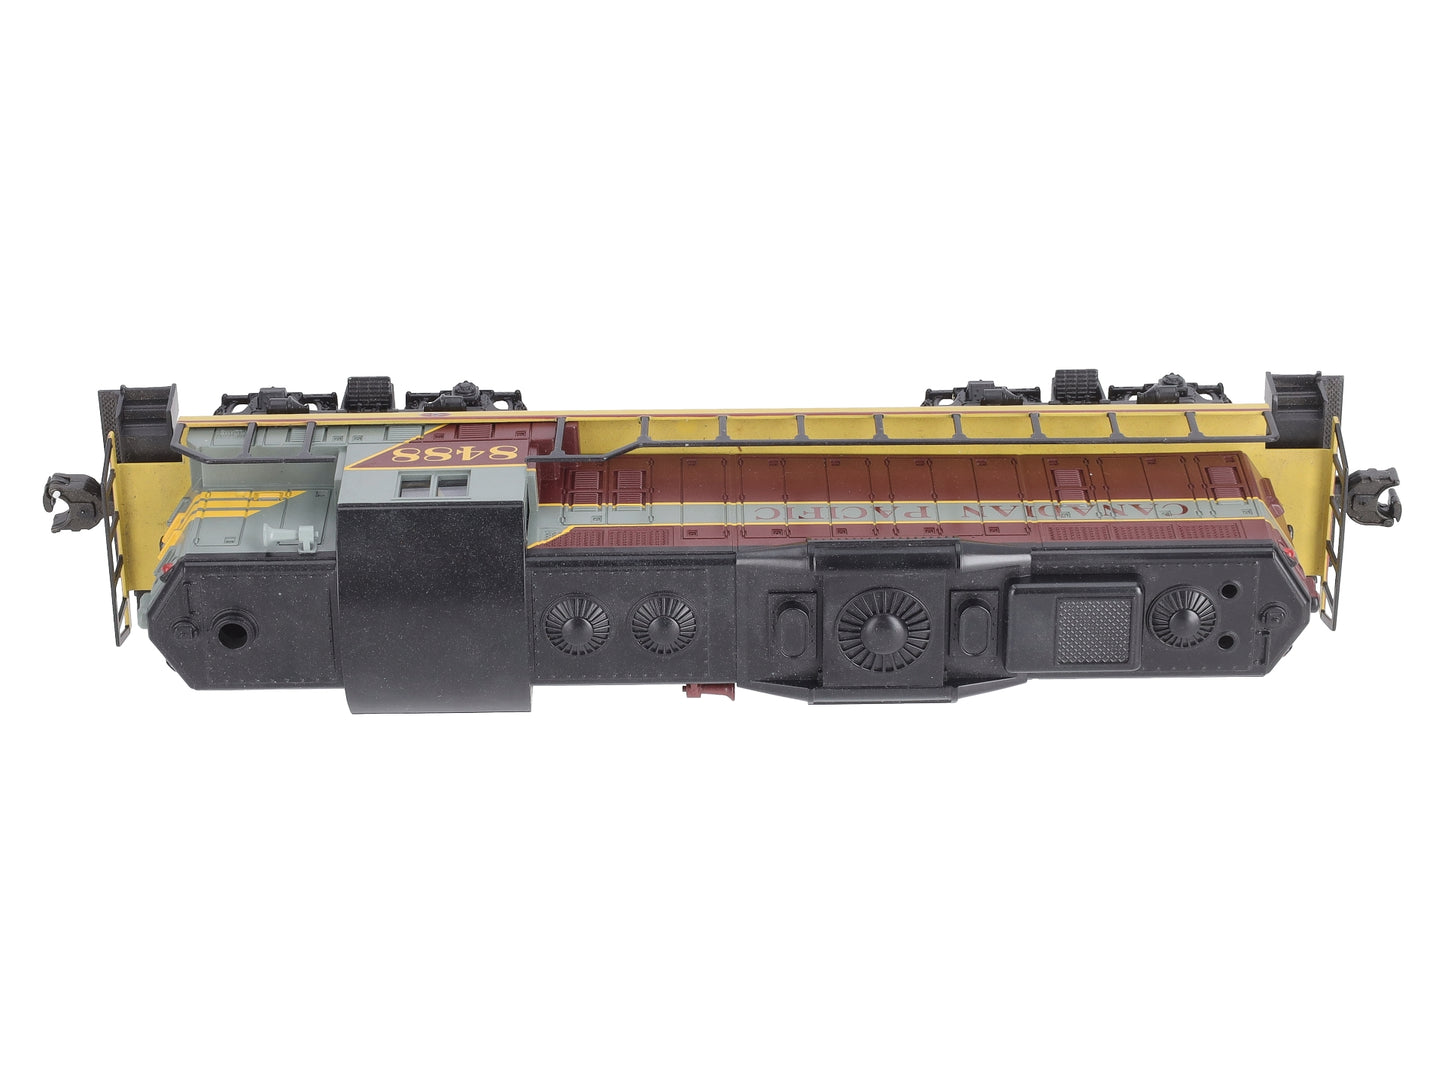 Williams GP9-206 O Gauge Canadian Pacific Diesel Locomotive #8488 LN/Box